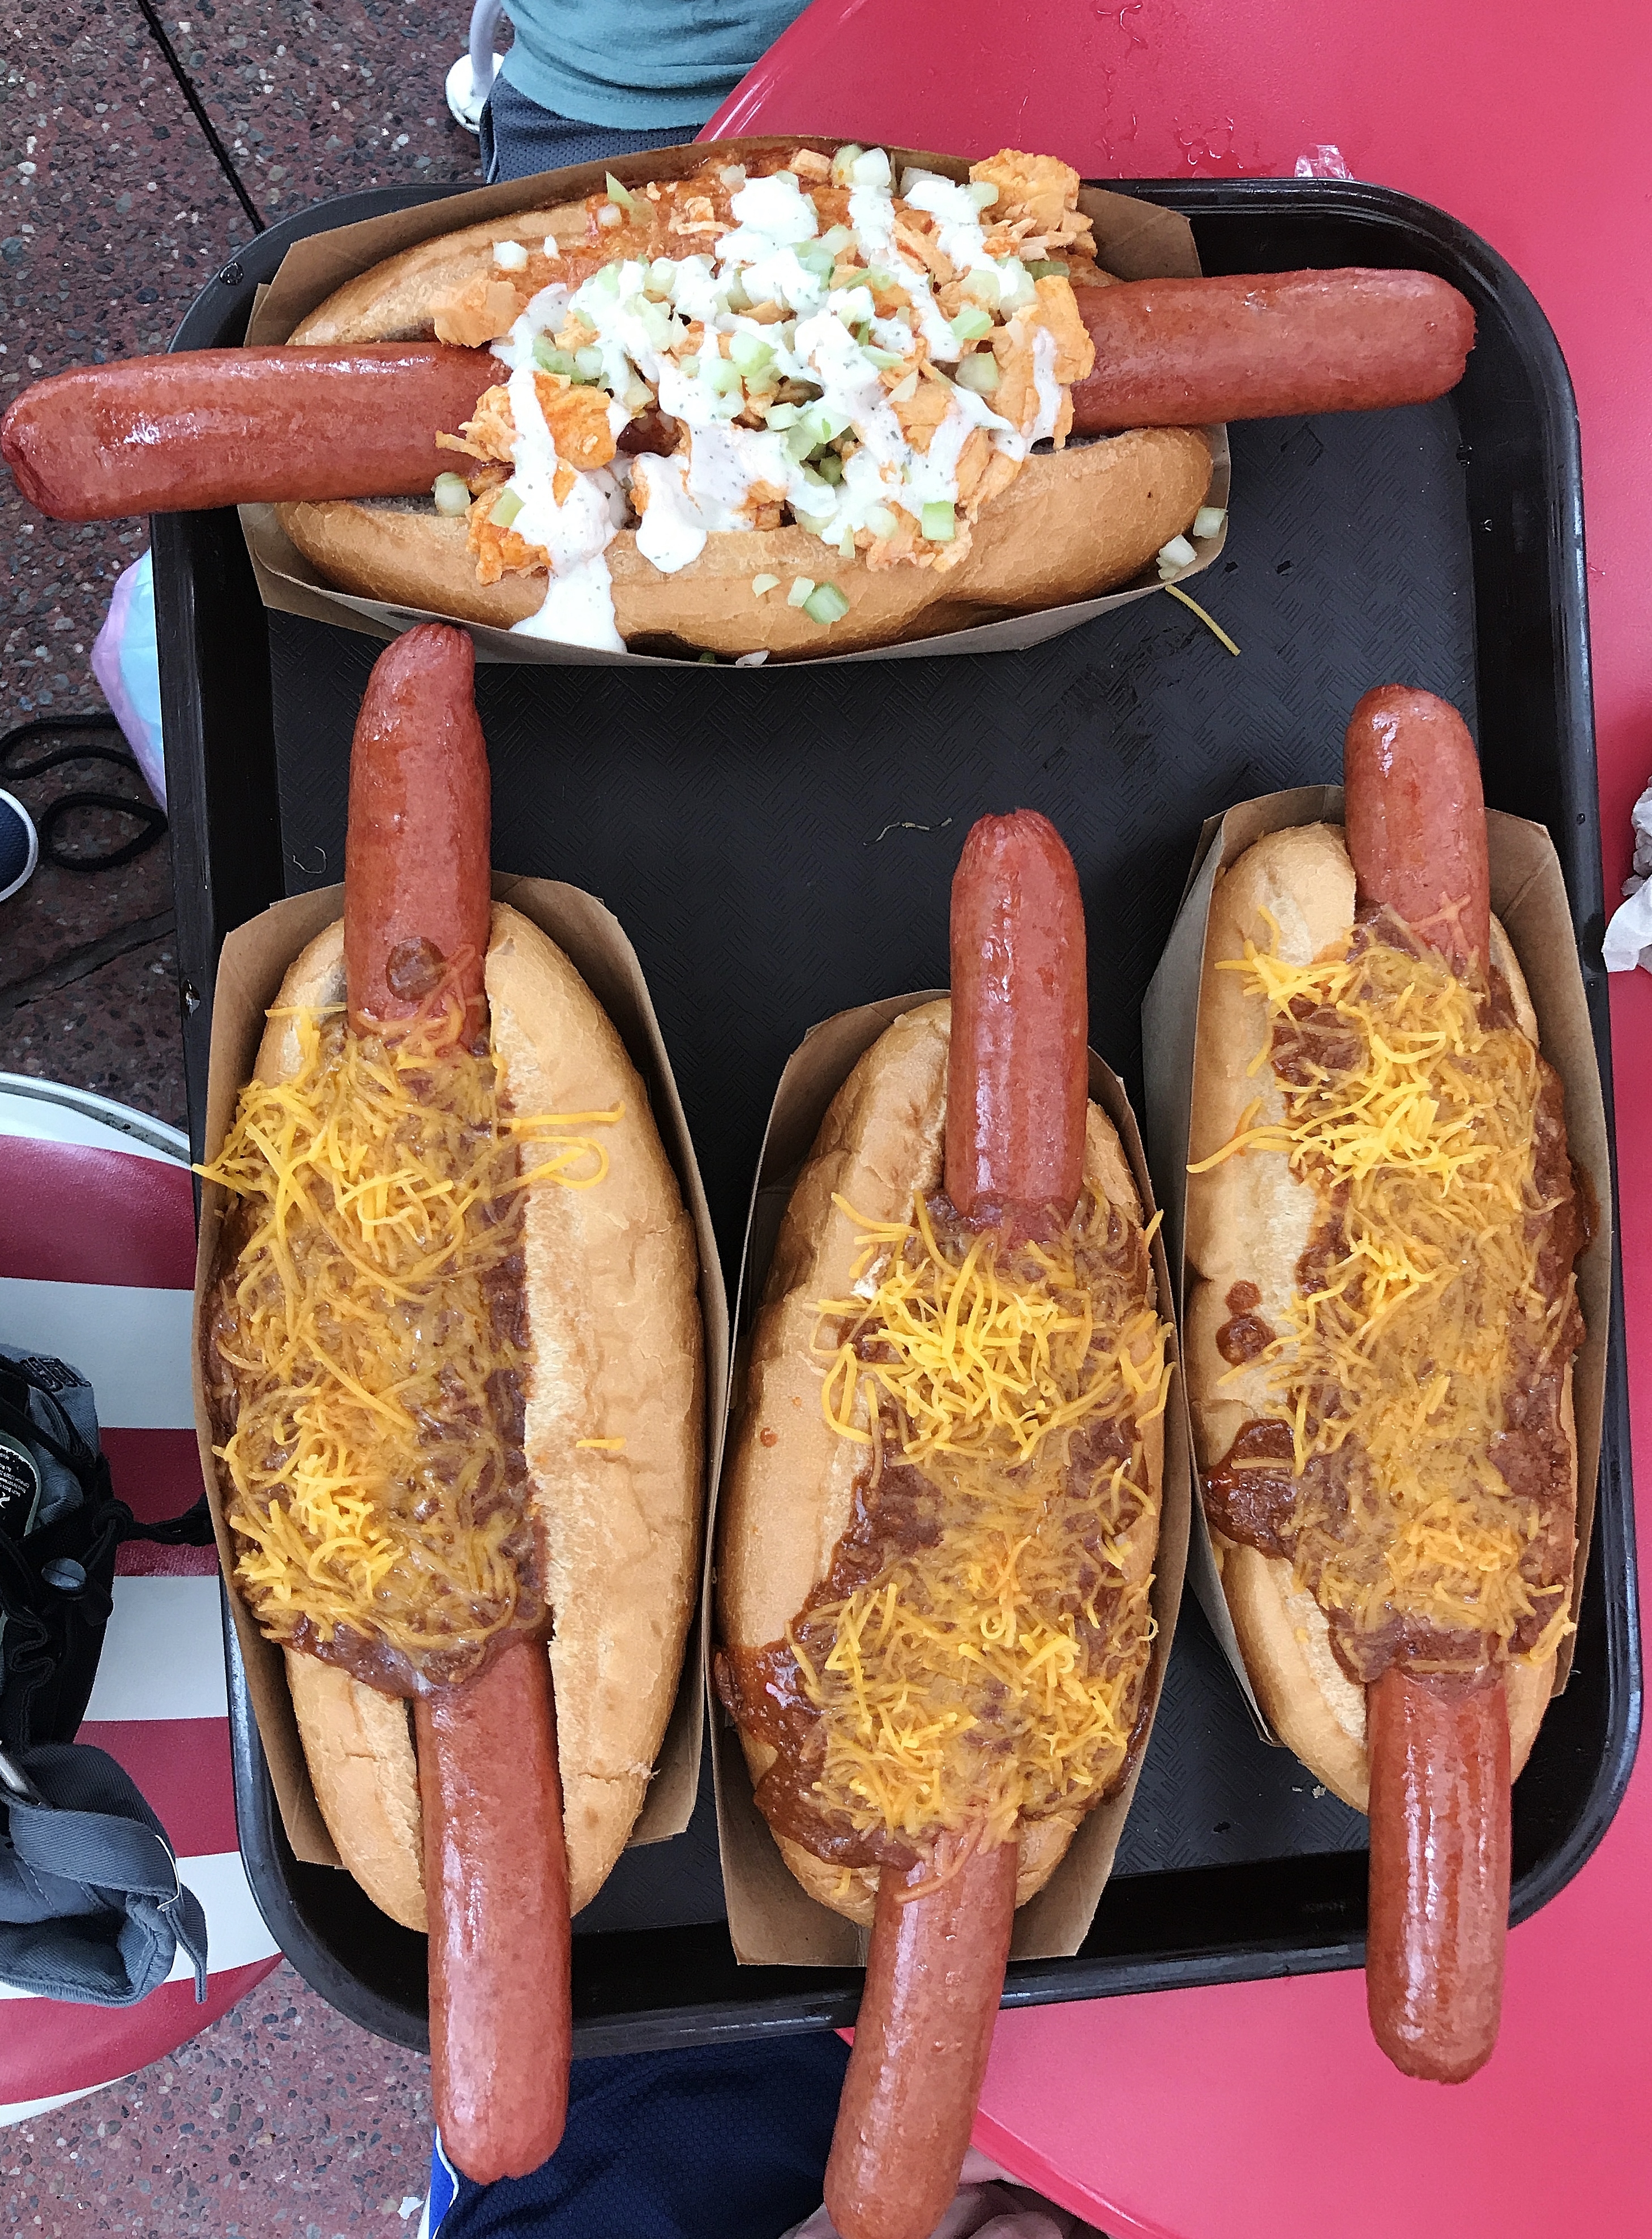 Caseys Corner - Le meilleur hot-dog de Disney